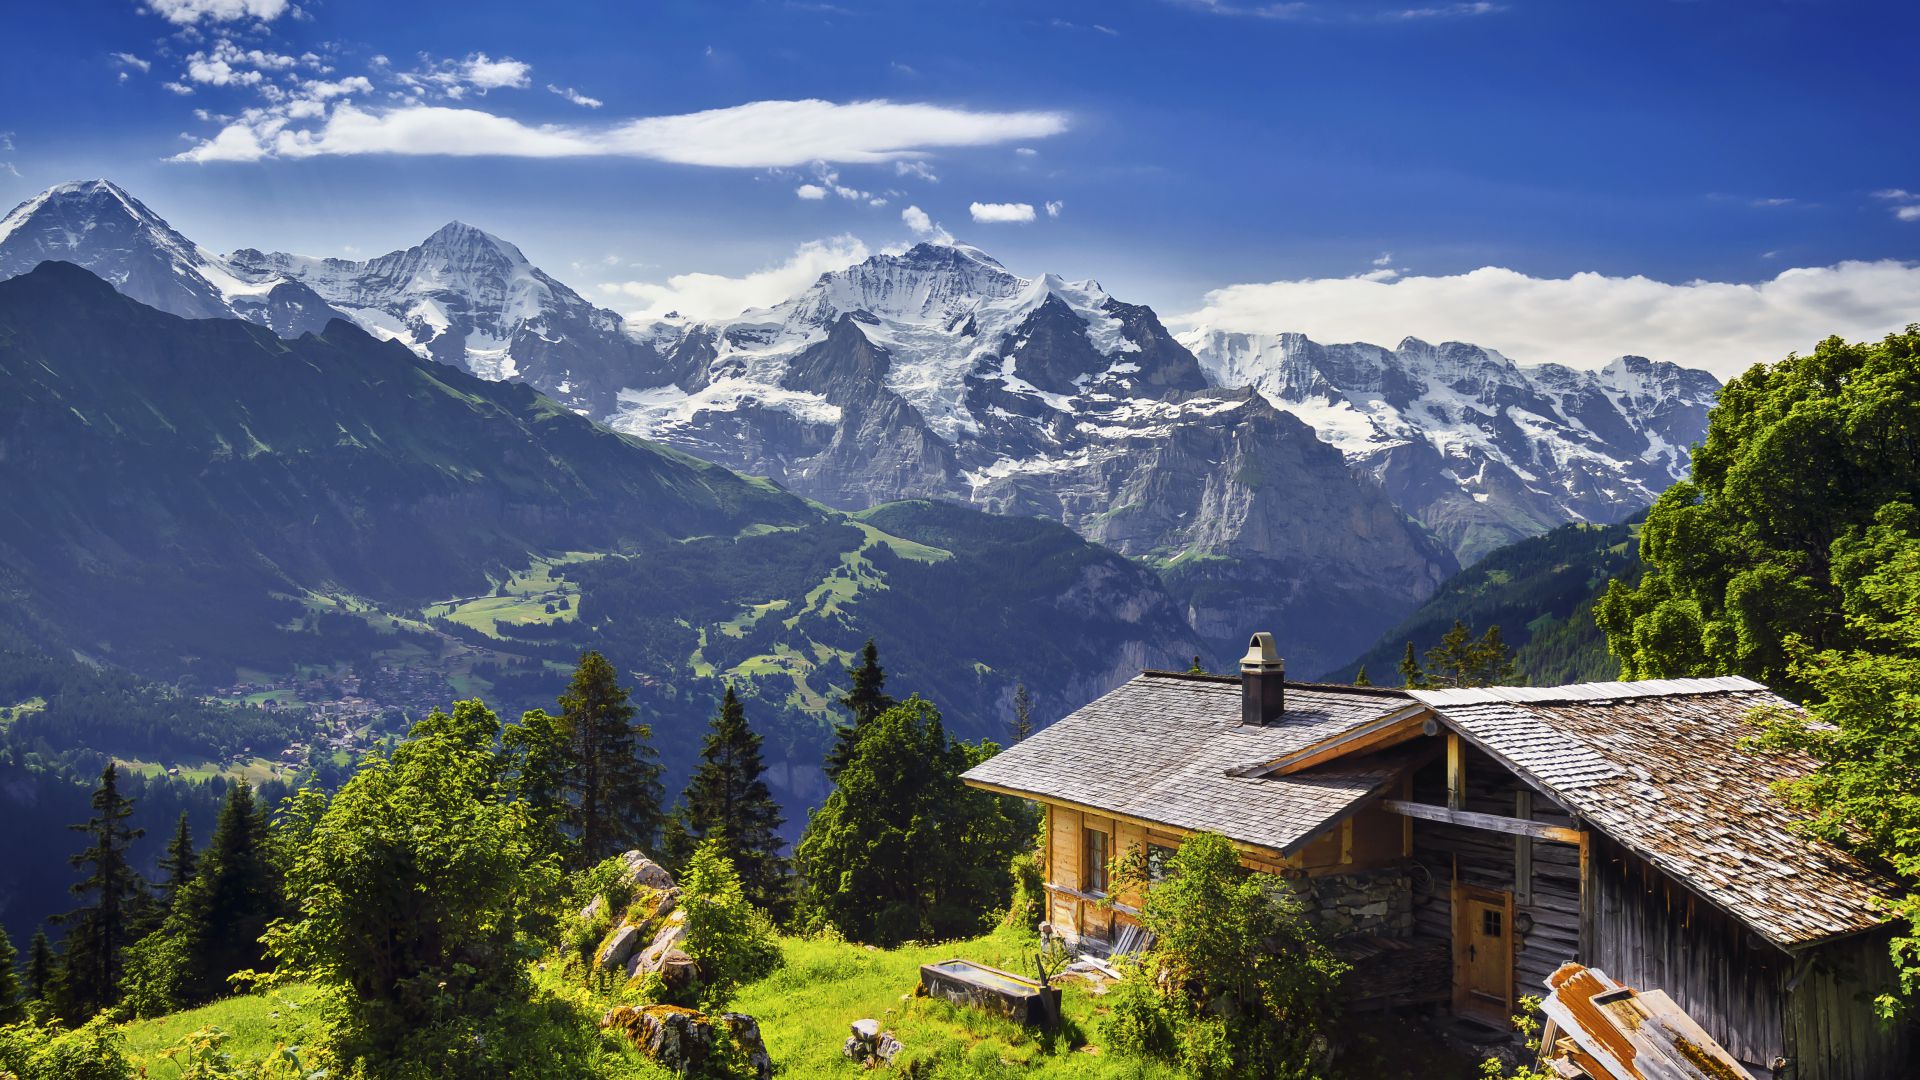 Швейцария, 5k, 4k, 8k, горы, небо, дом, Switzerland, 5k, 4k wallpaper, 8k, mountains, sky, house (horizontal)